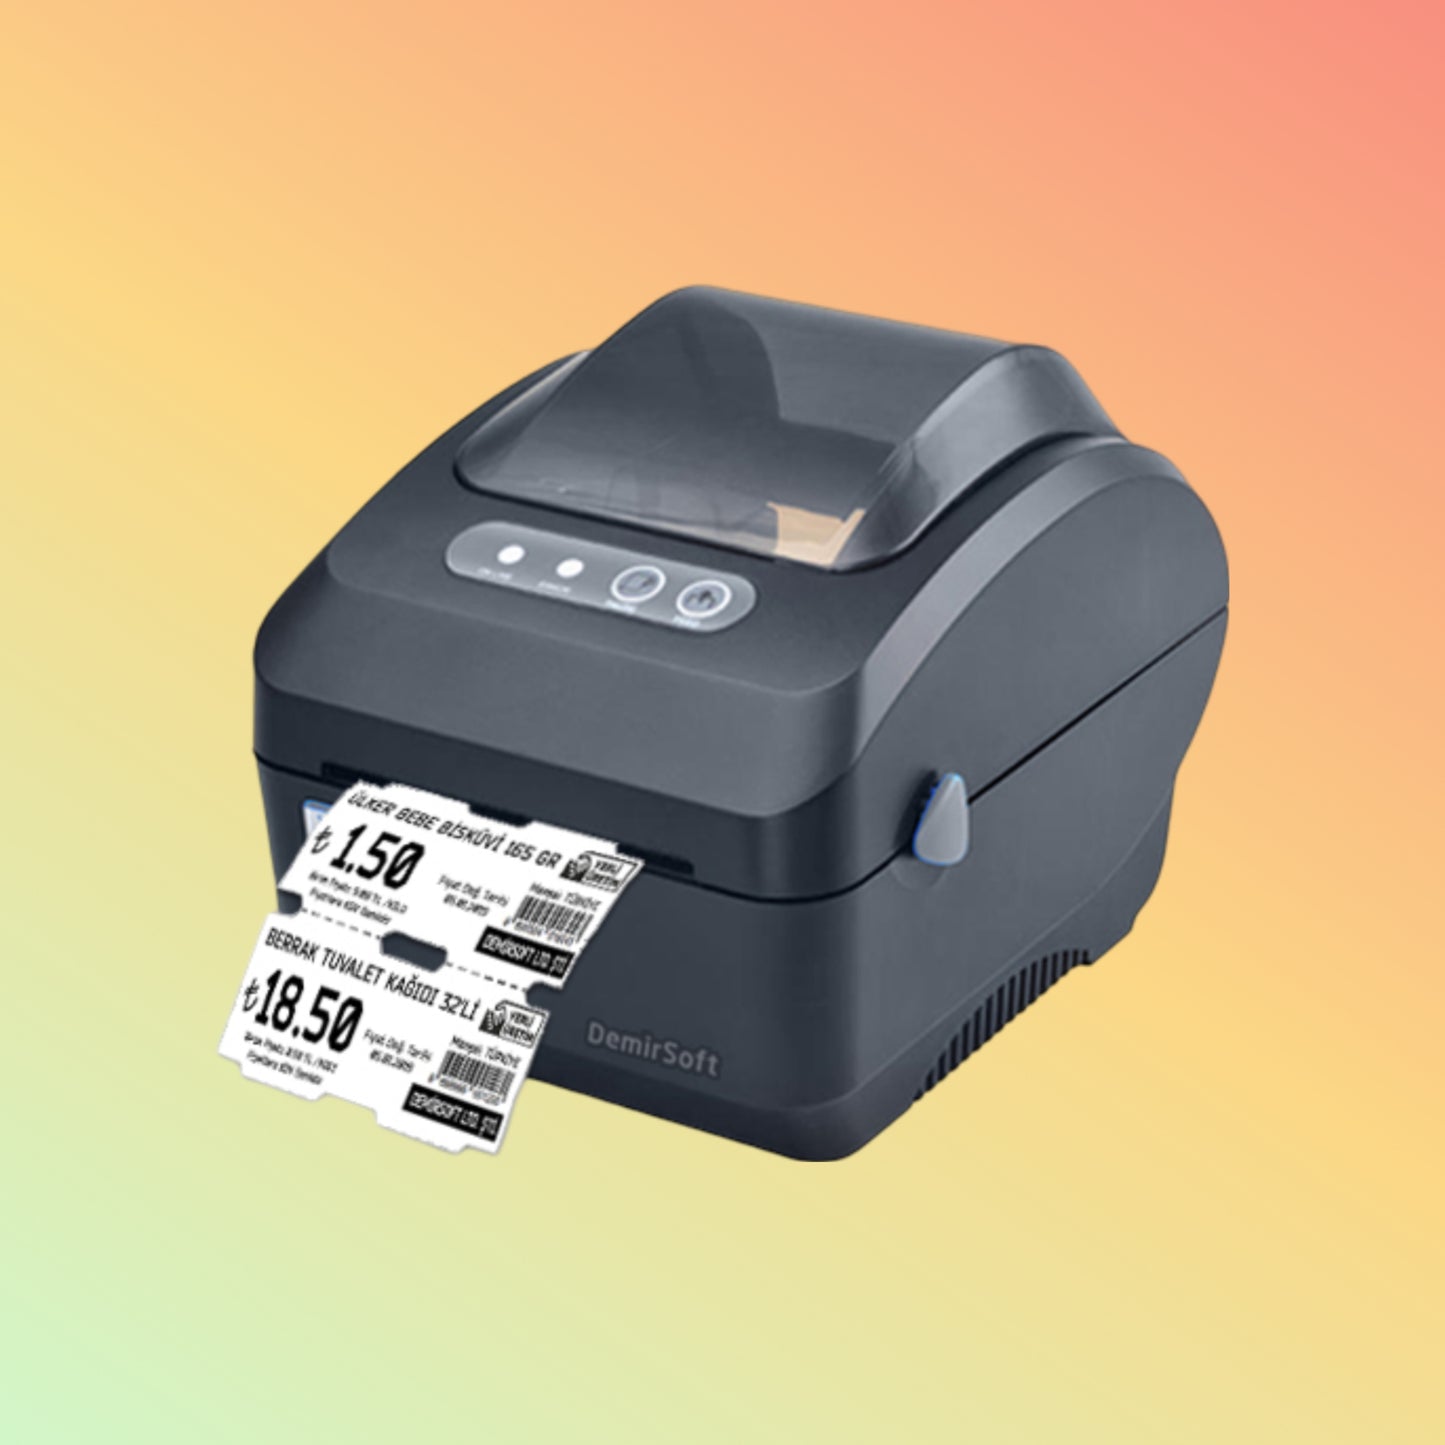 Postech PT-R325DT Label Printer